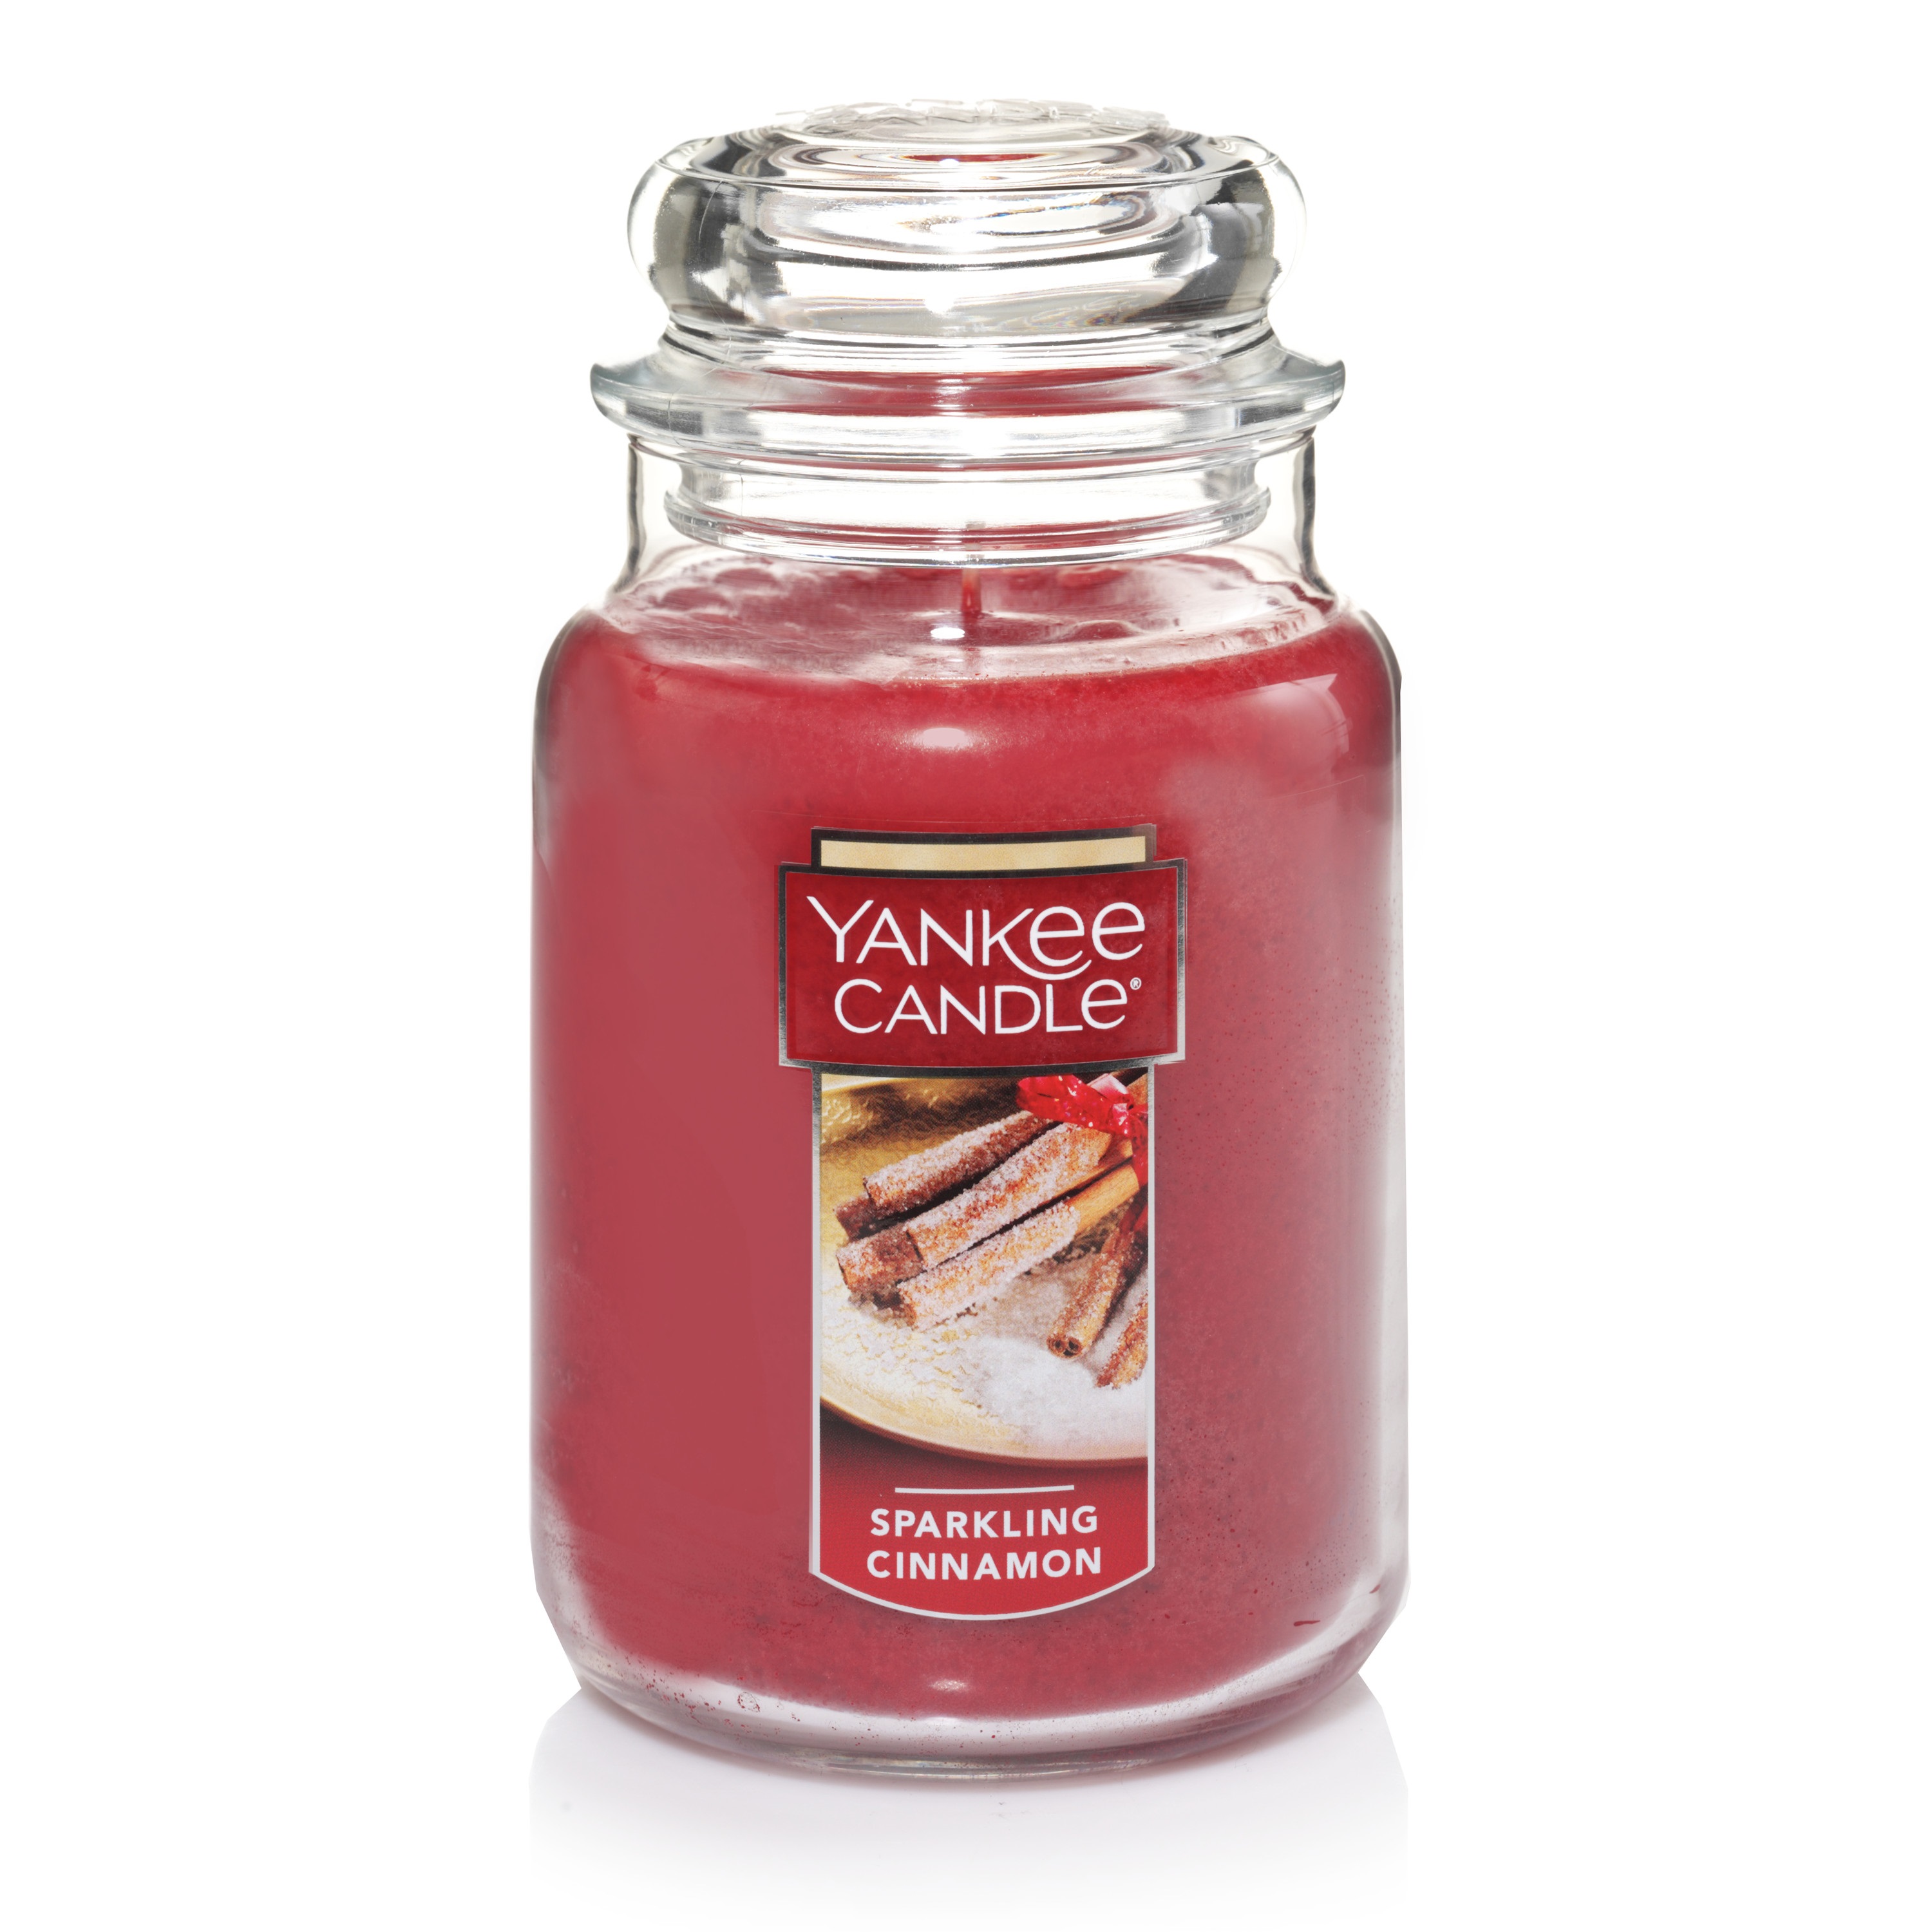 Yankee Candle Sparkling Cinnamon - 22 oz Original Large Jar Scented Candle - image 1 of 7